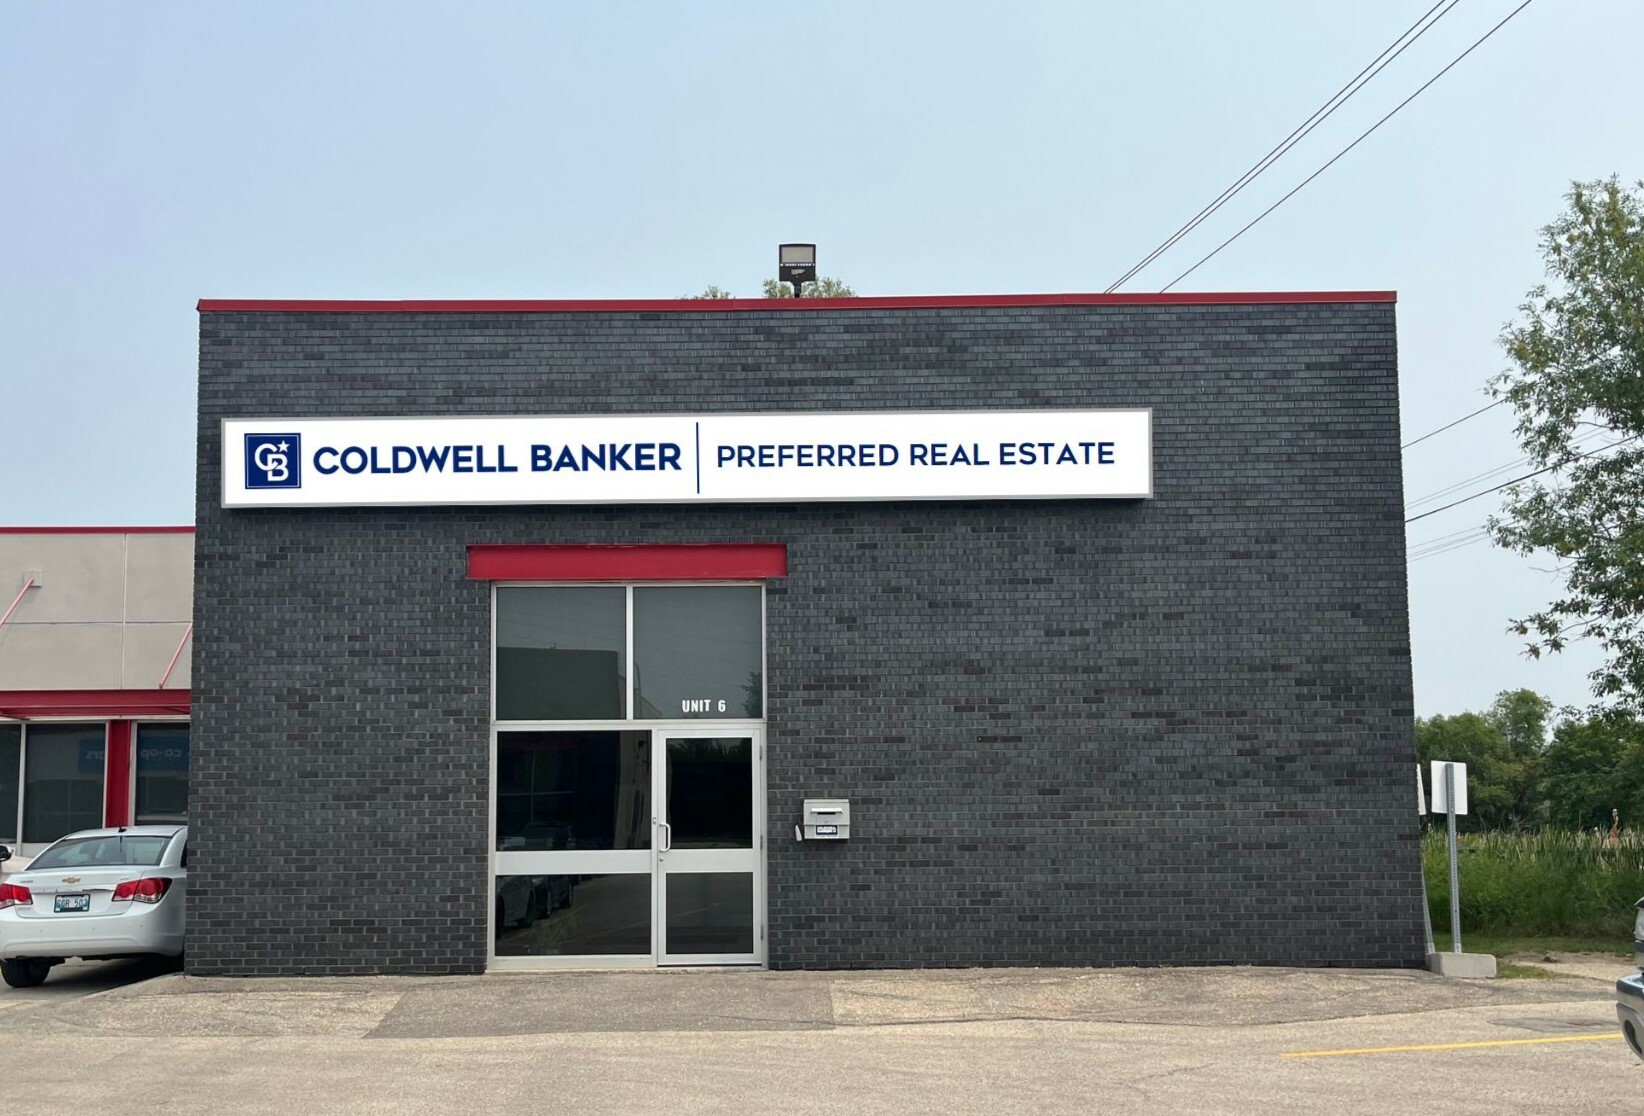 Coldwell Banker Preferred Real Estate,Winnipeg,Coldwell Banker Preferred Real Estate